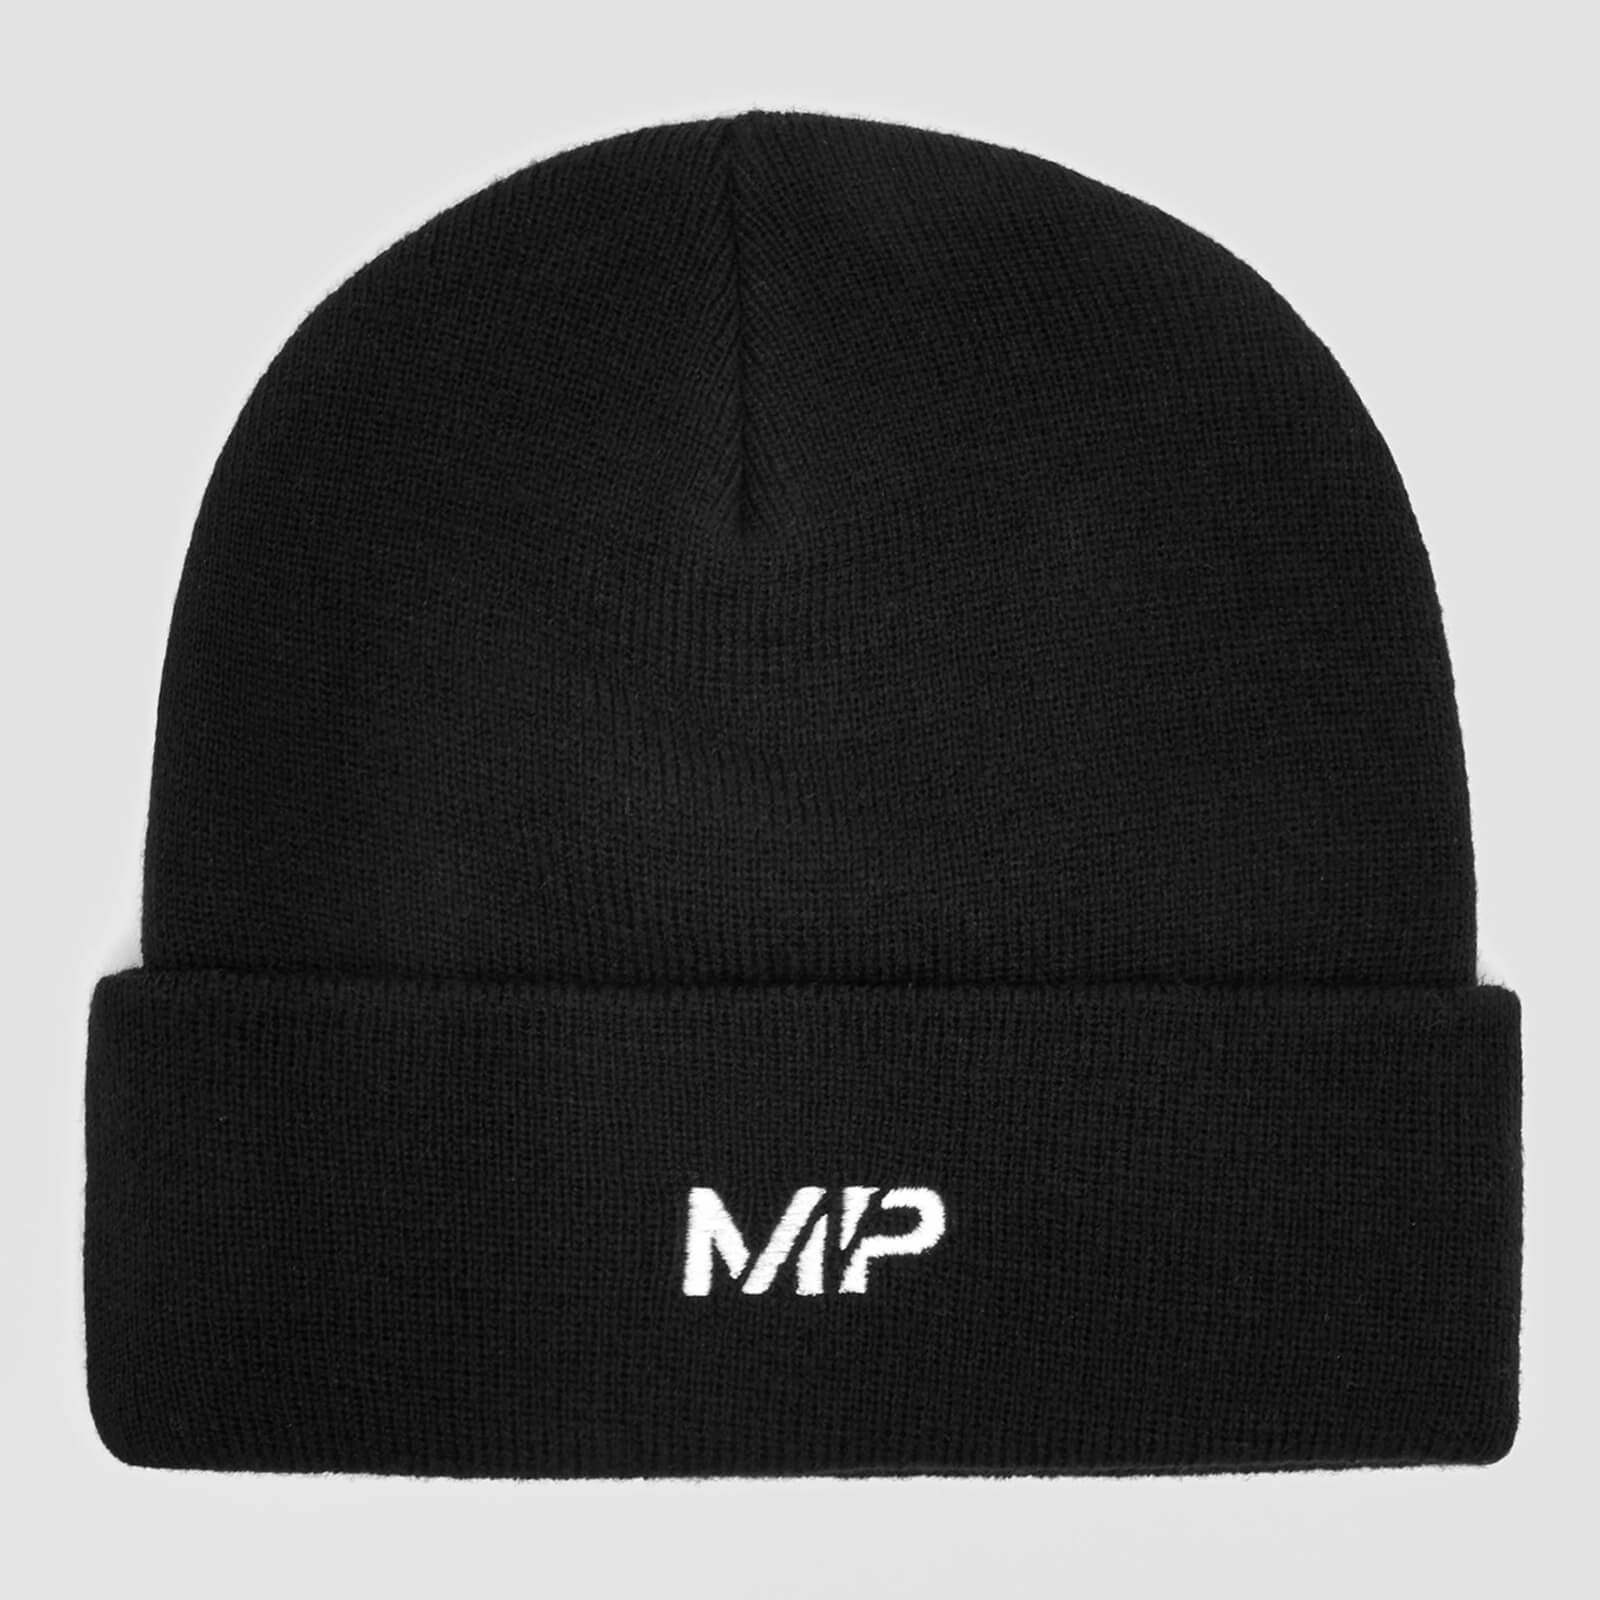 MP Embroidered Logo Beanie Hat - Black/White